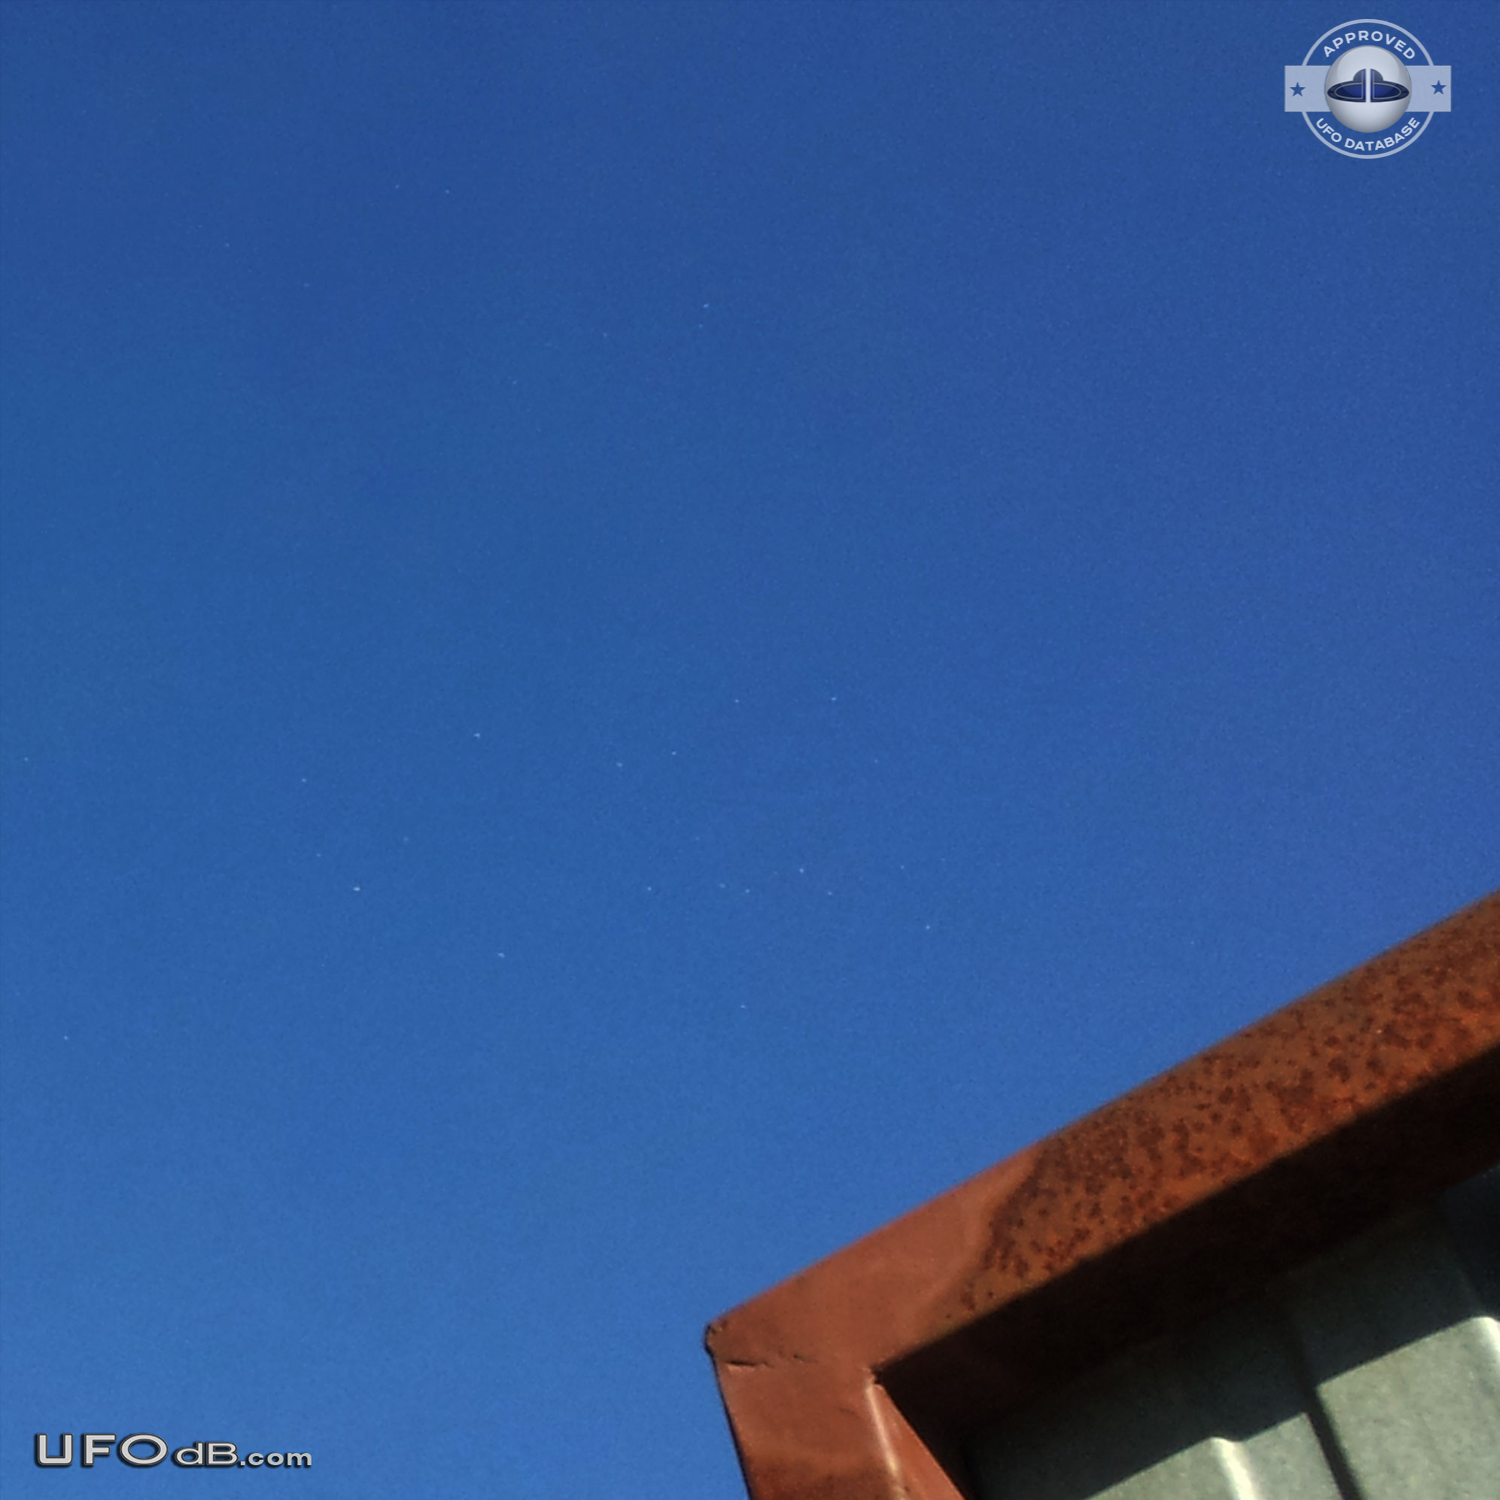 Fleet of UFOs in the blue sky - photo - San Jose, California - 2012 UFO Picture #404-1